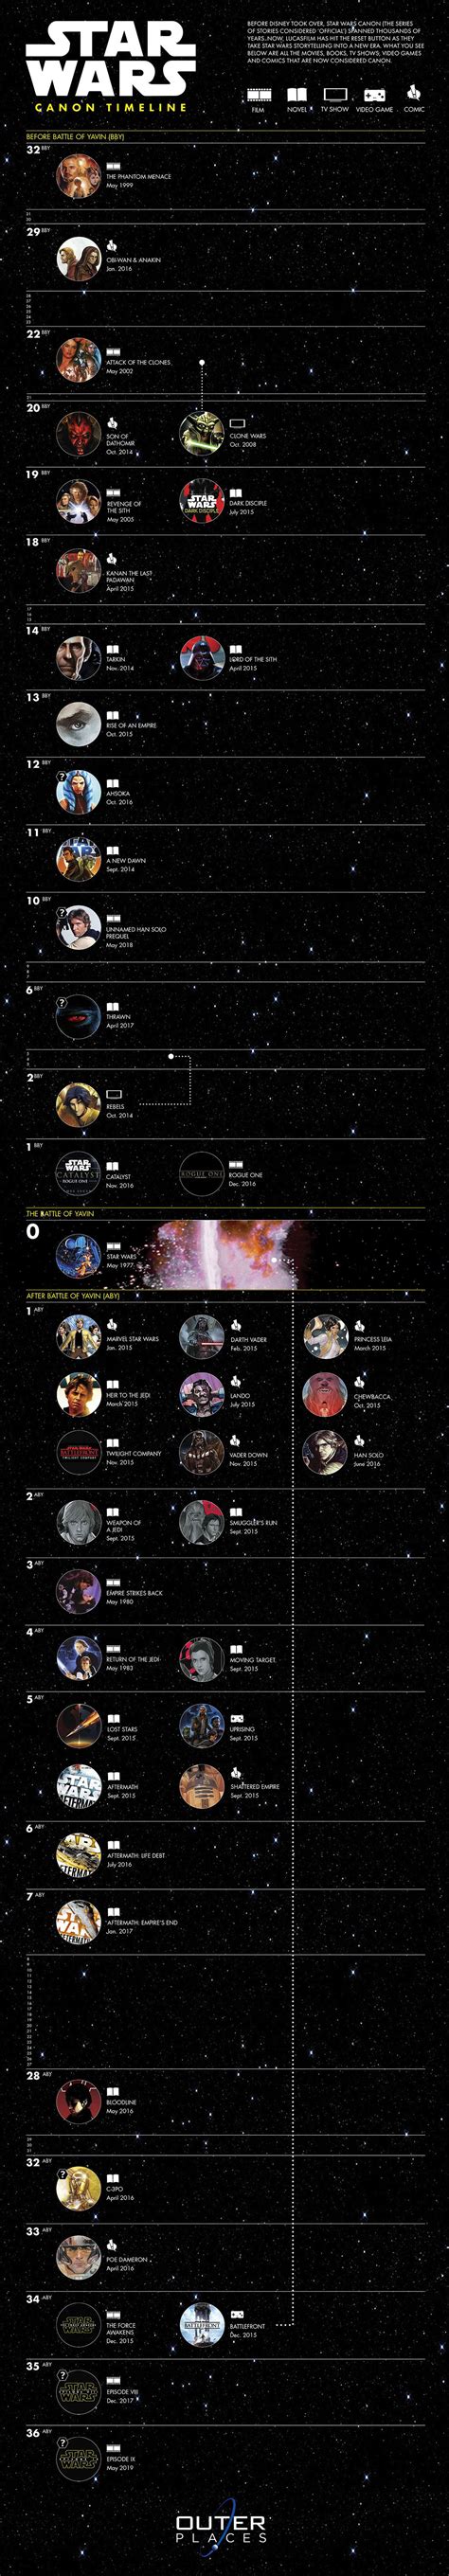 Star Wars Movie Timeline Gospellasopa